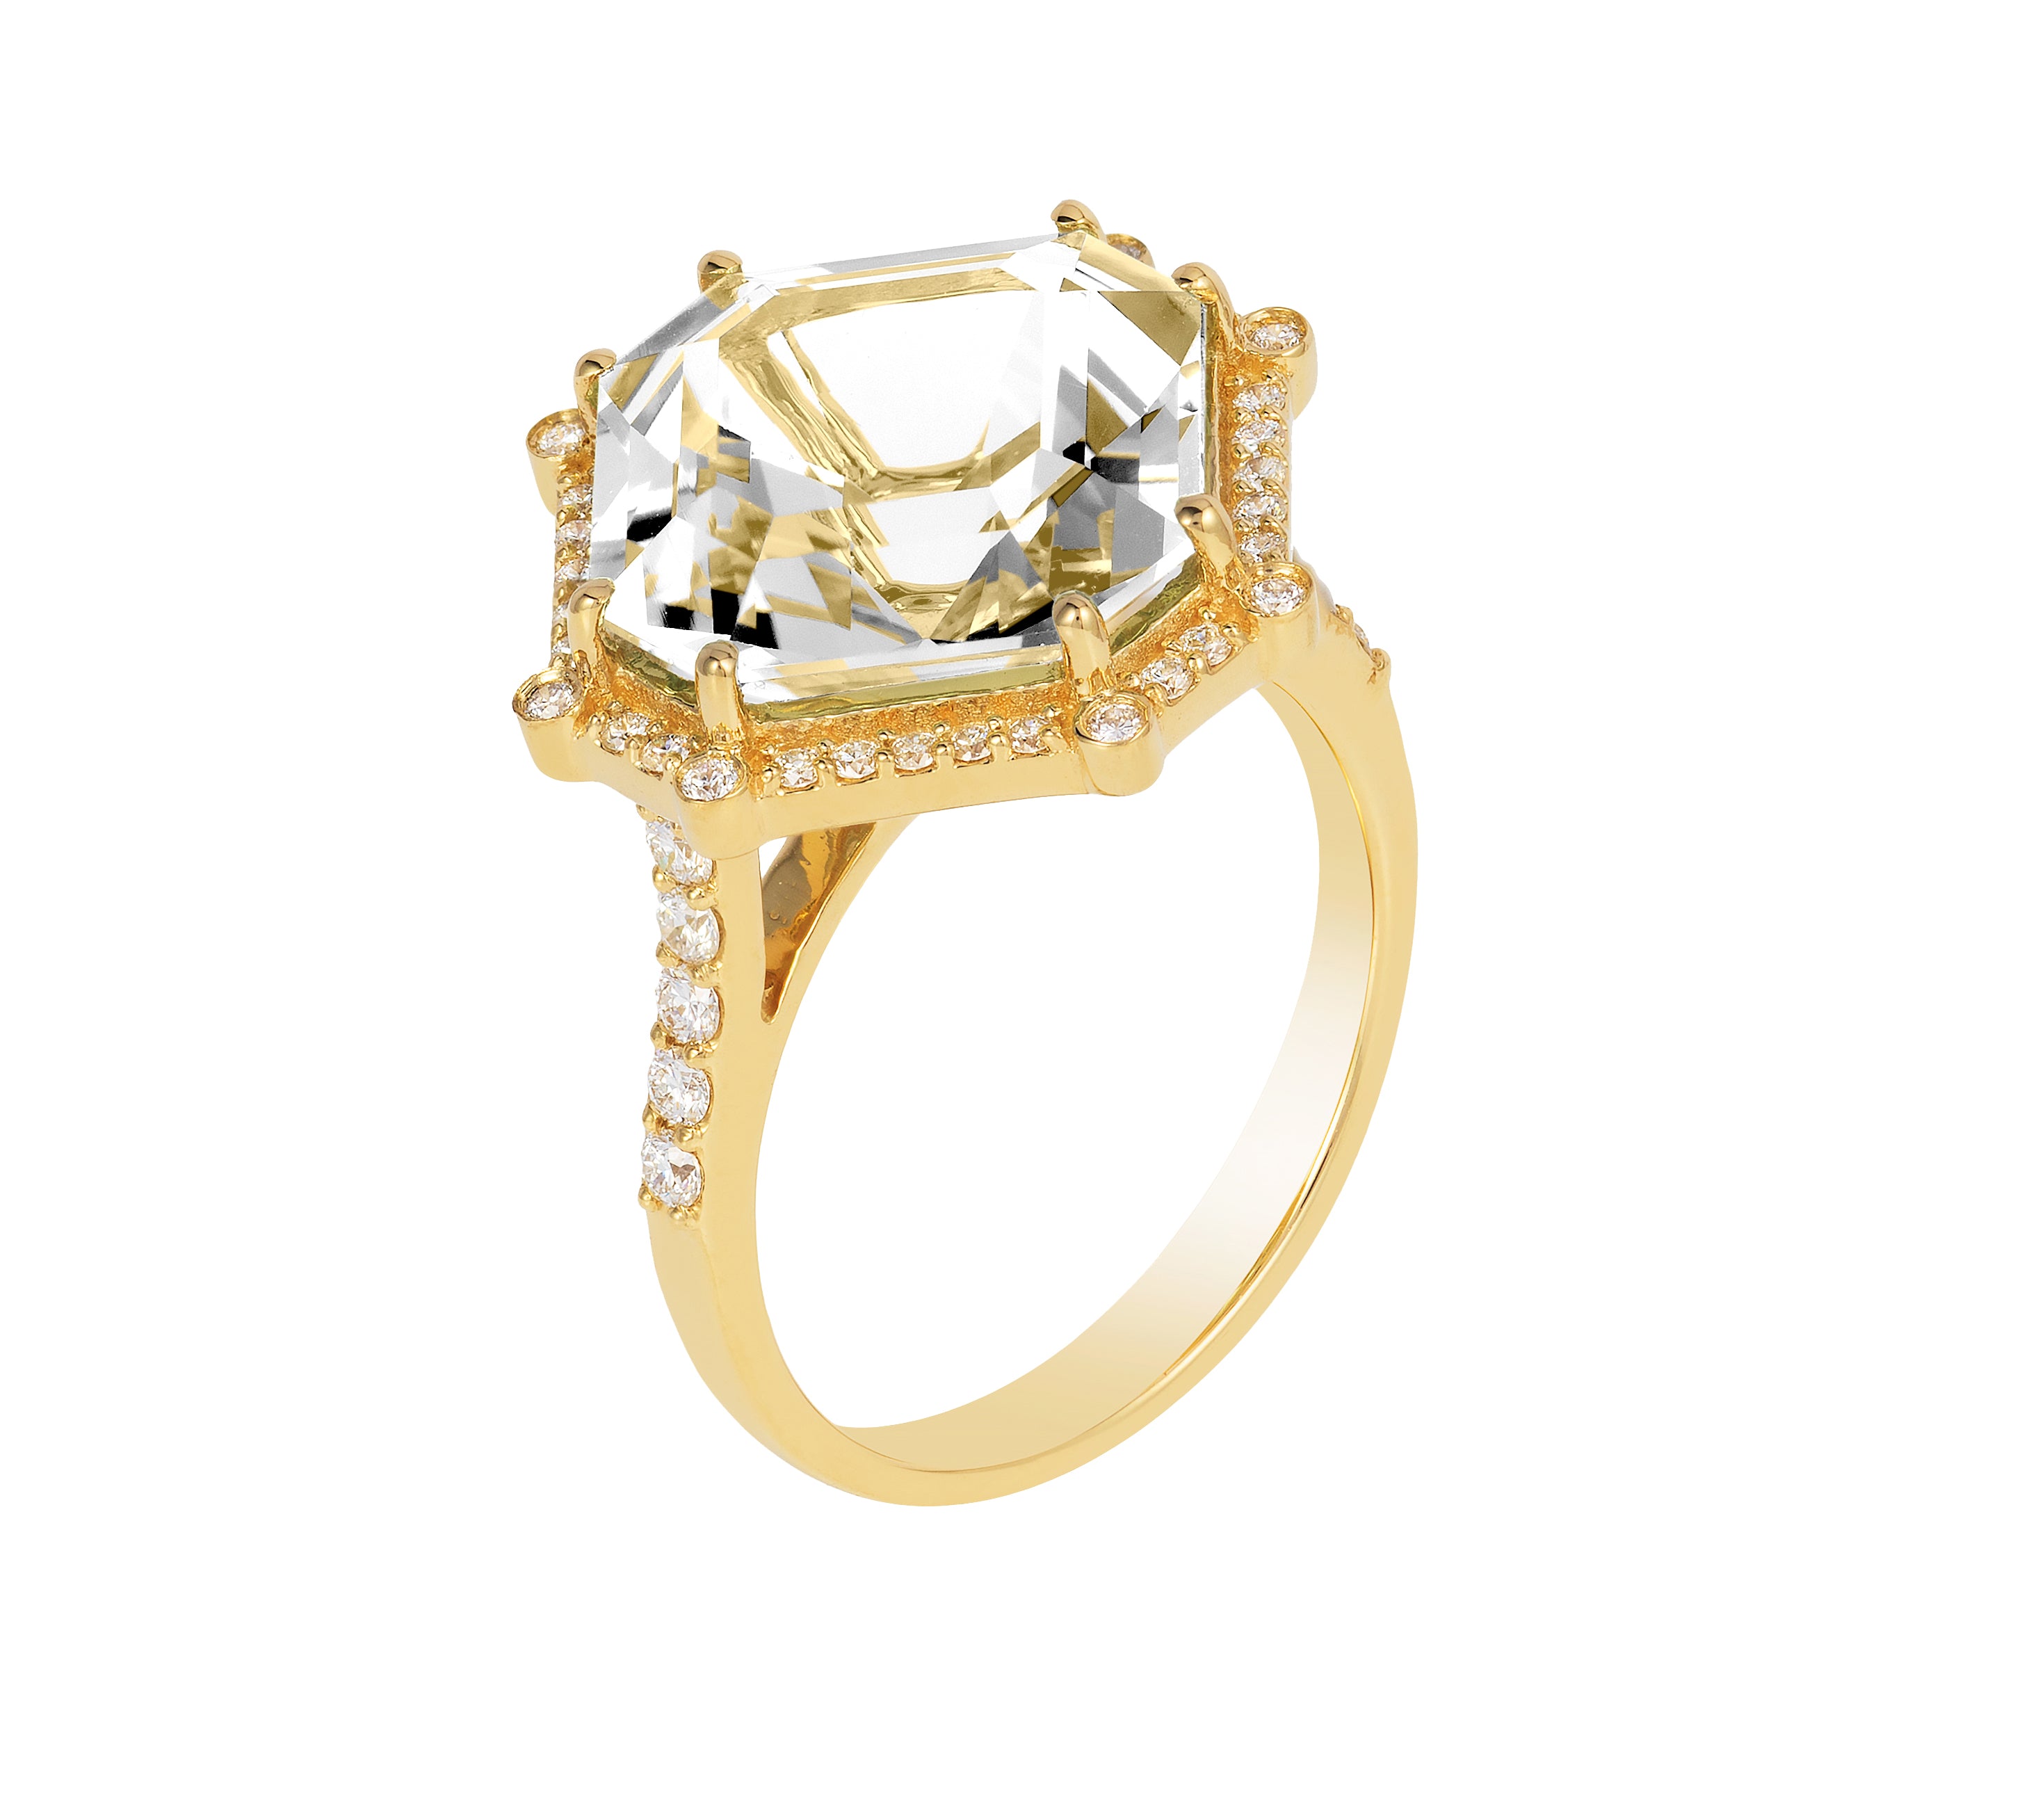 Rock Crystal Octagon Ring with Diamonds Cocktail Goshwara   